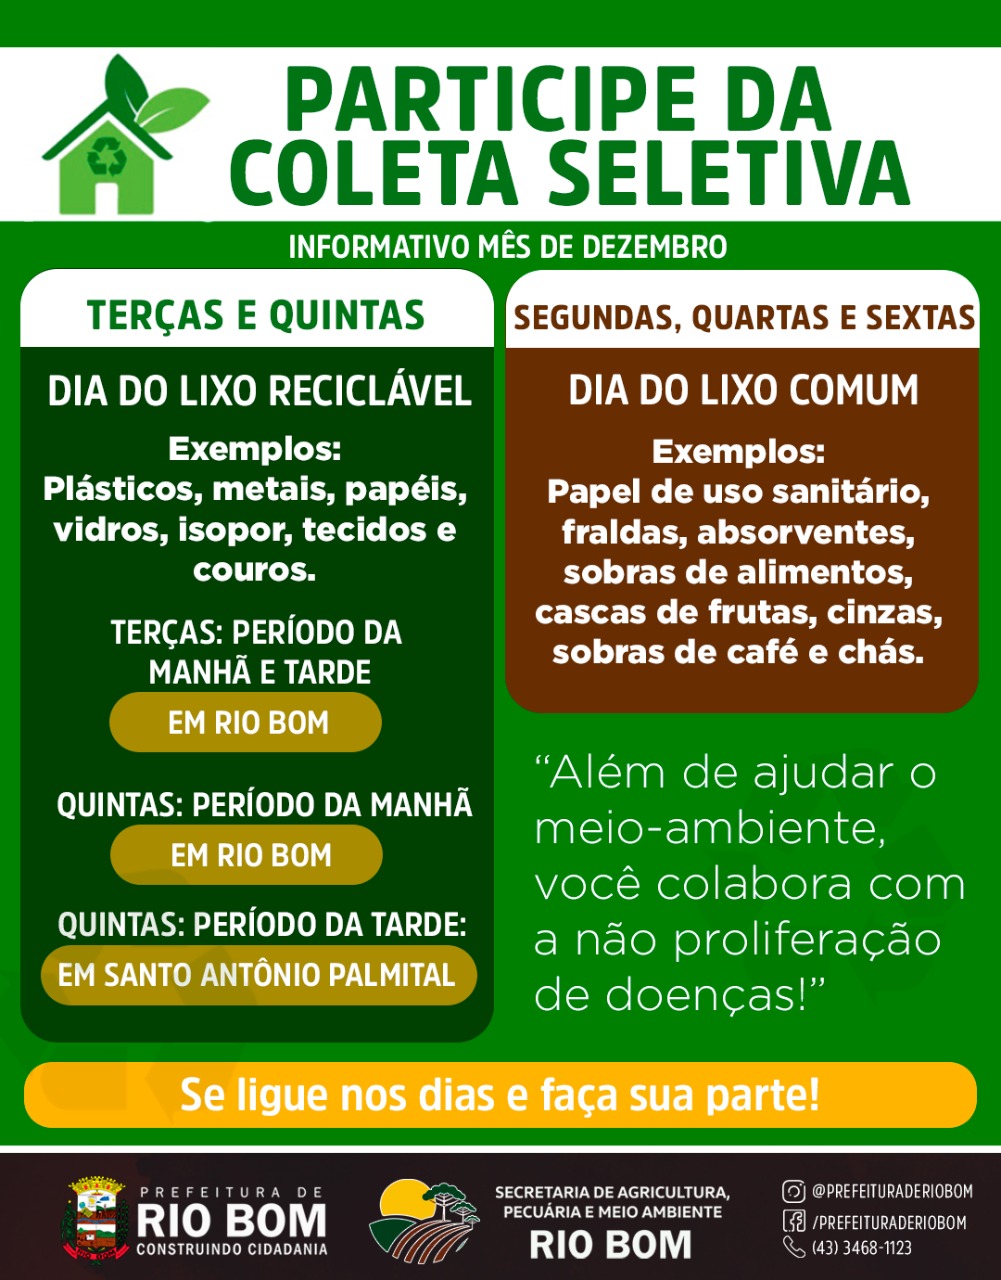 RIO BOM - Participe da Coleta Seletiva